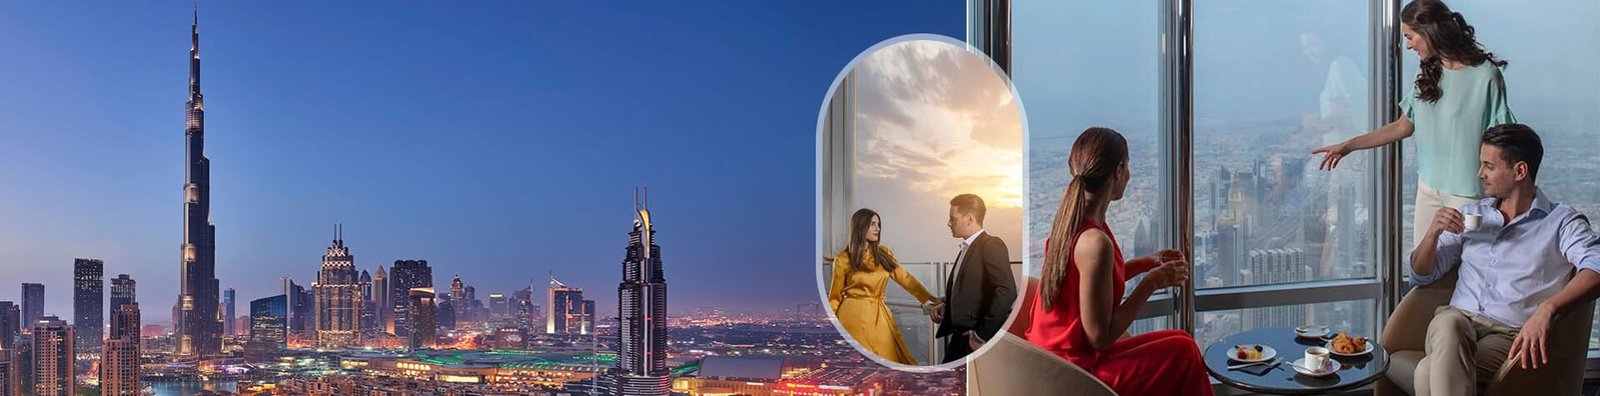 The Lounge Burj Khalifa Entry Ticket